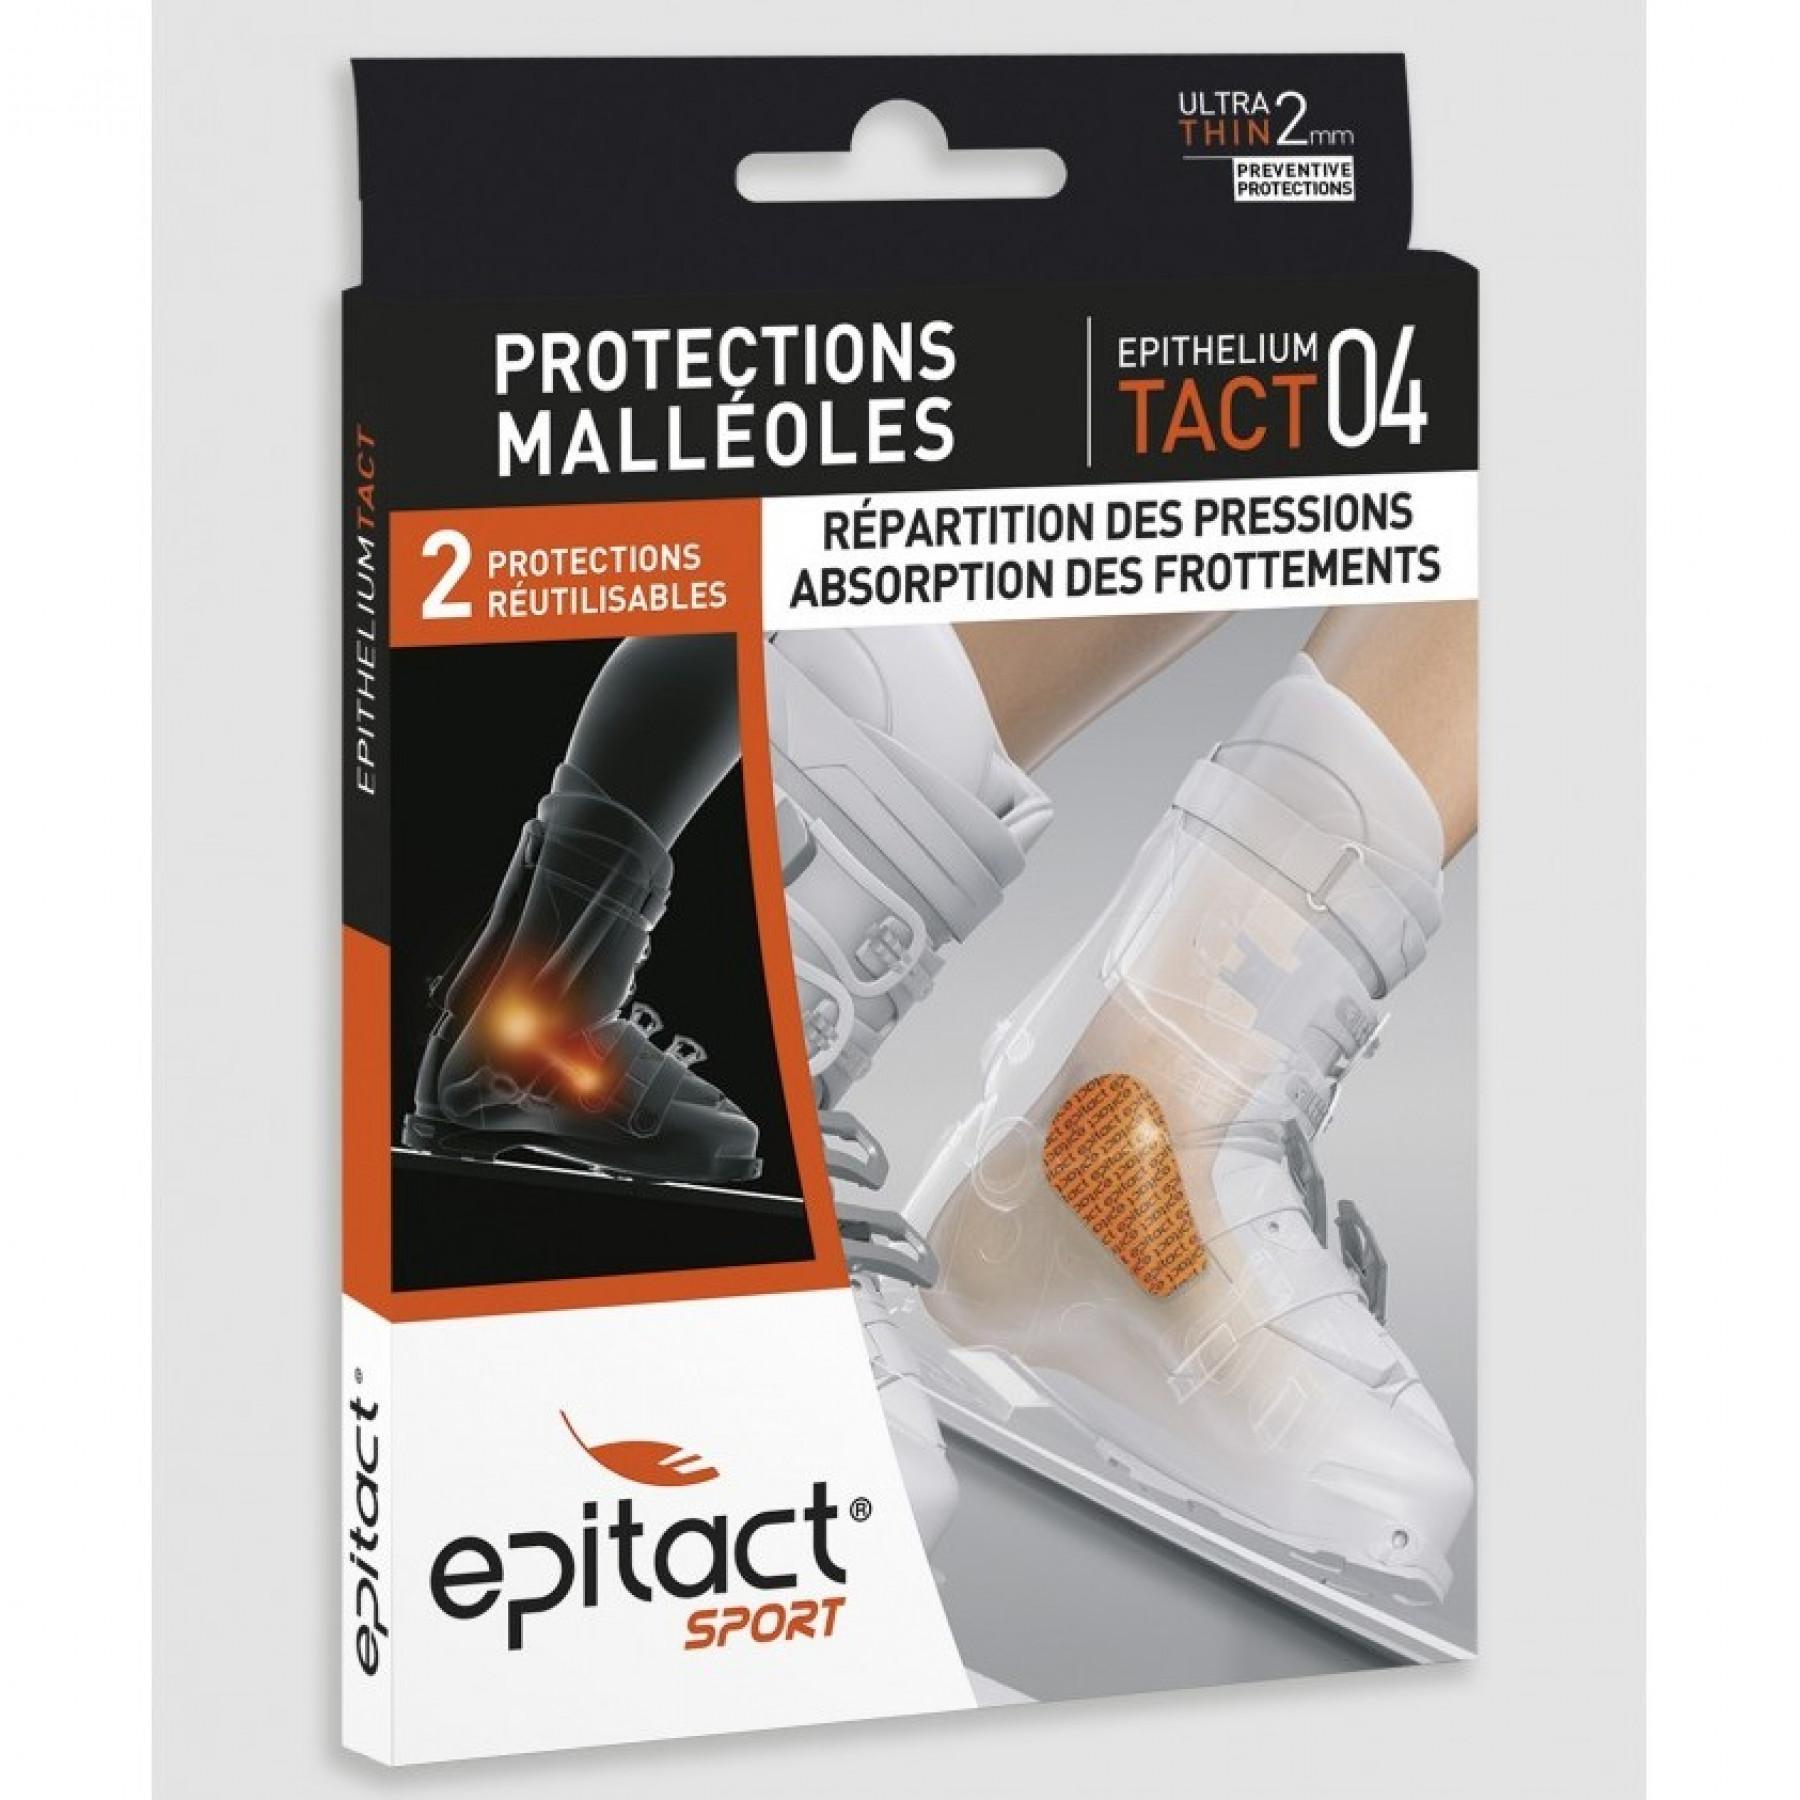 Malleolaire beschermers Epitact EPITHELIUMTACT 04 (lot de 2 protections)